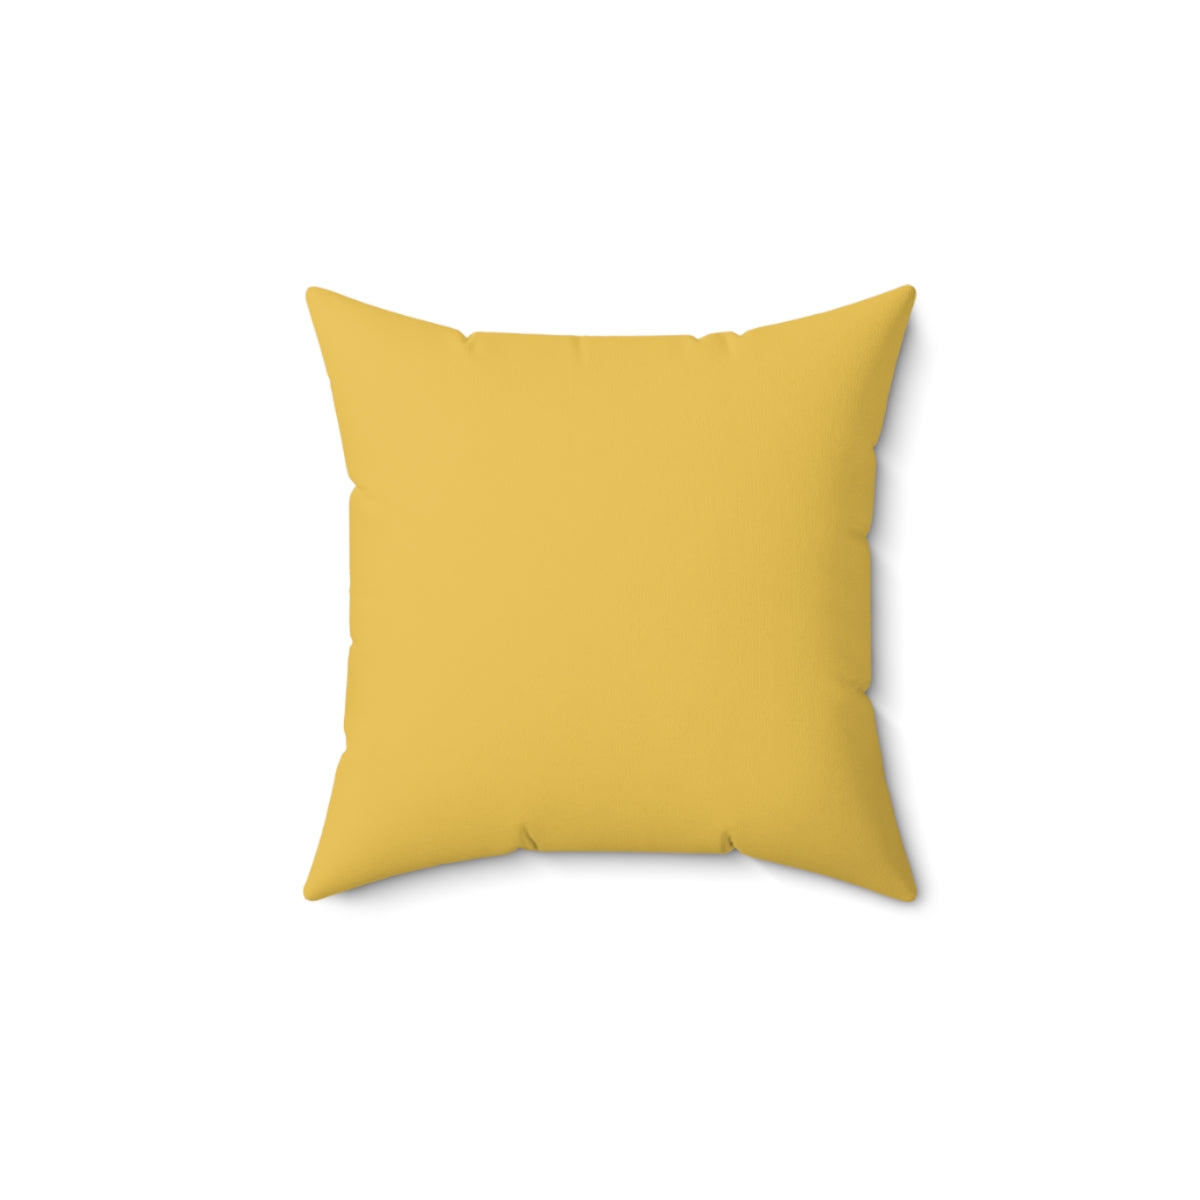 Affirmative “Expanding” Square Pillow